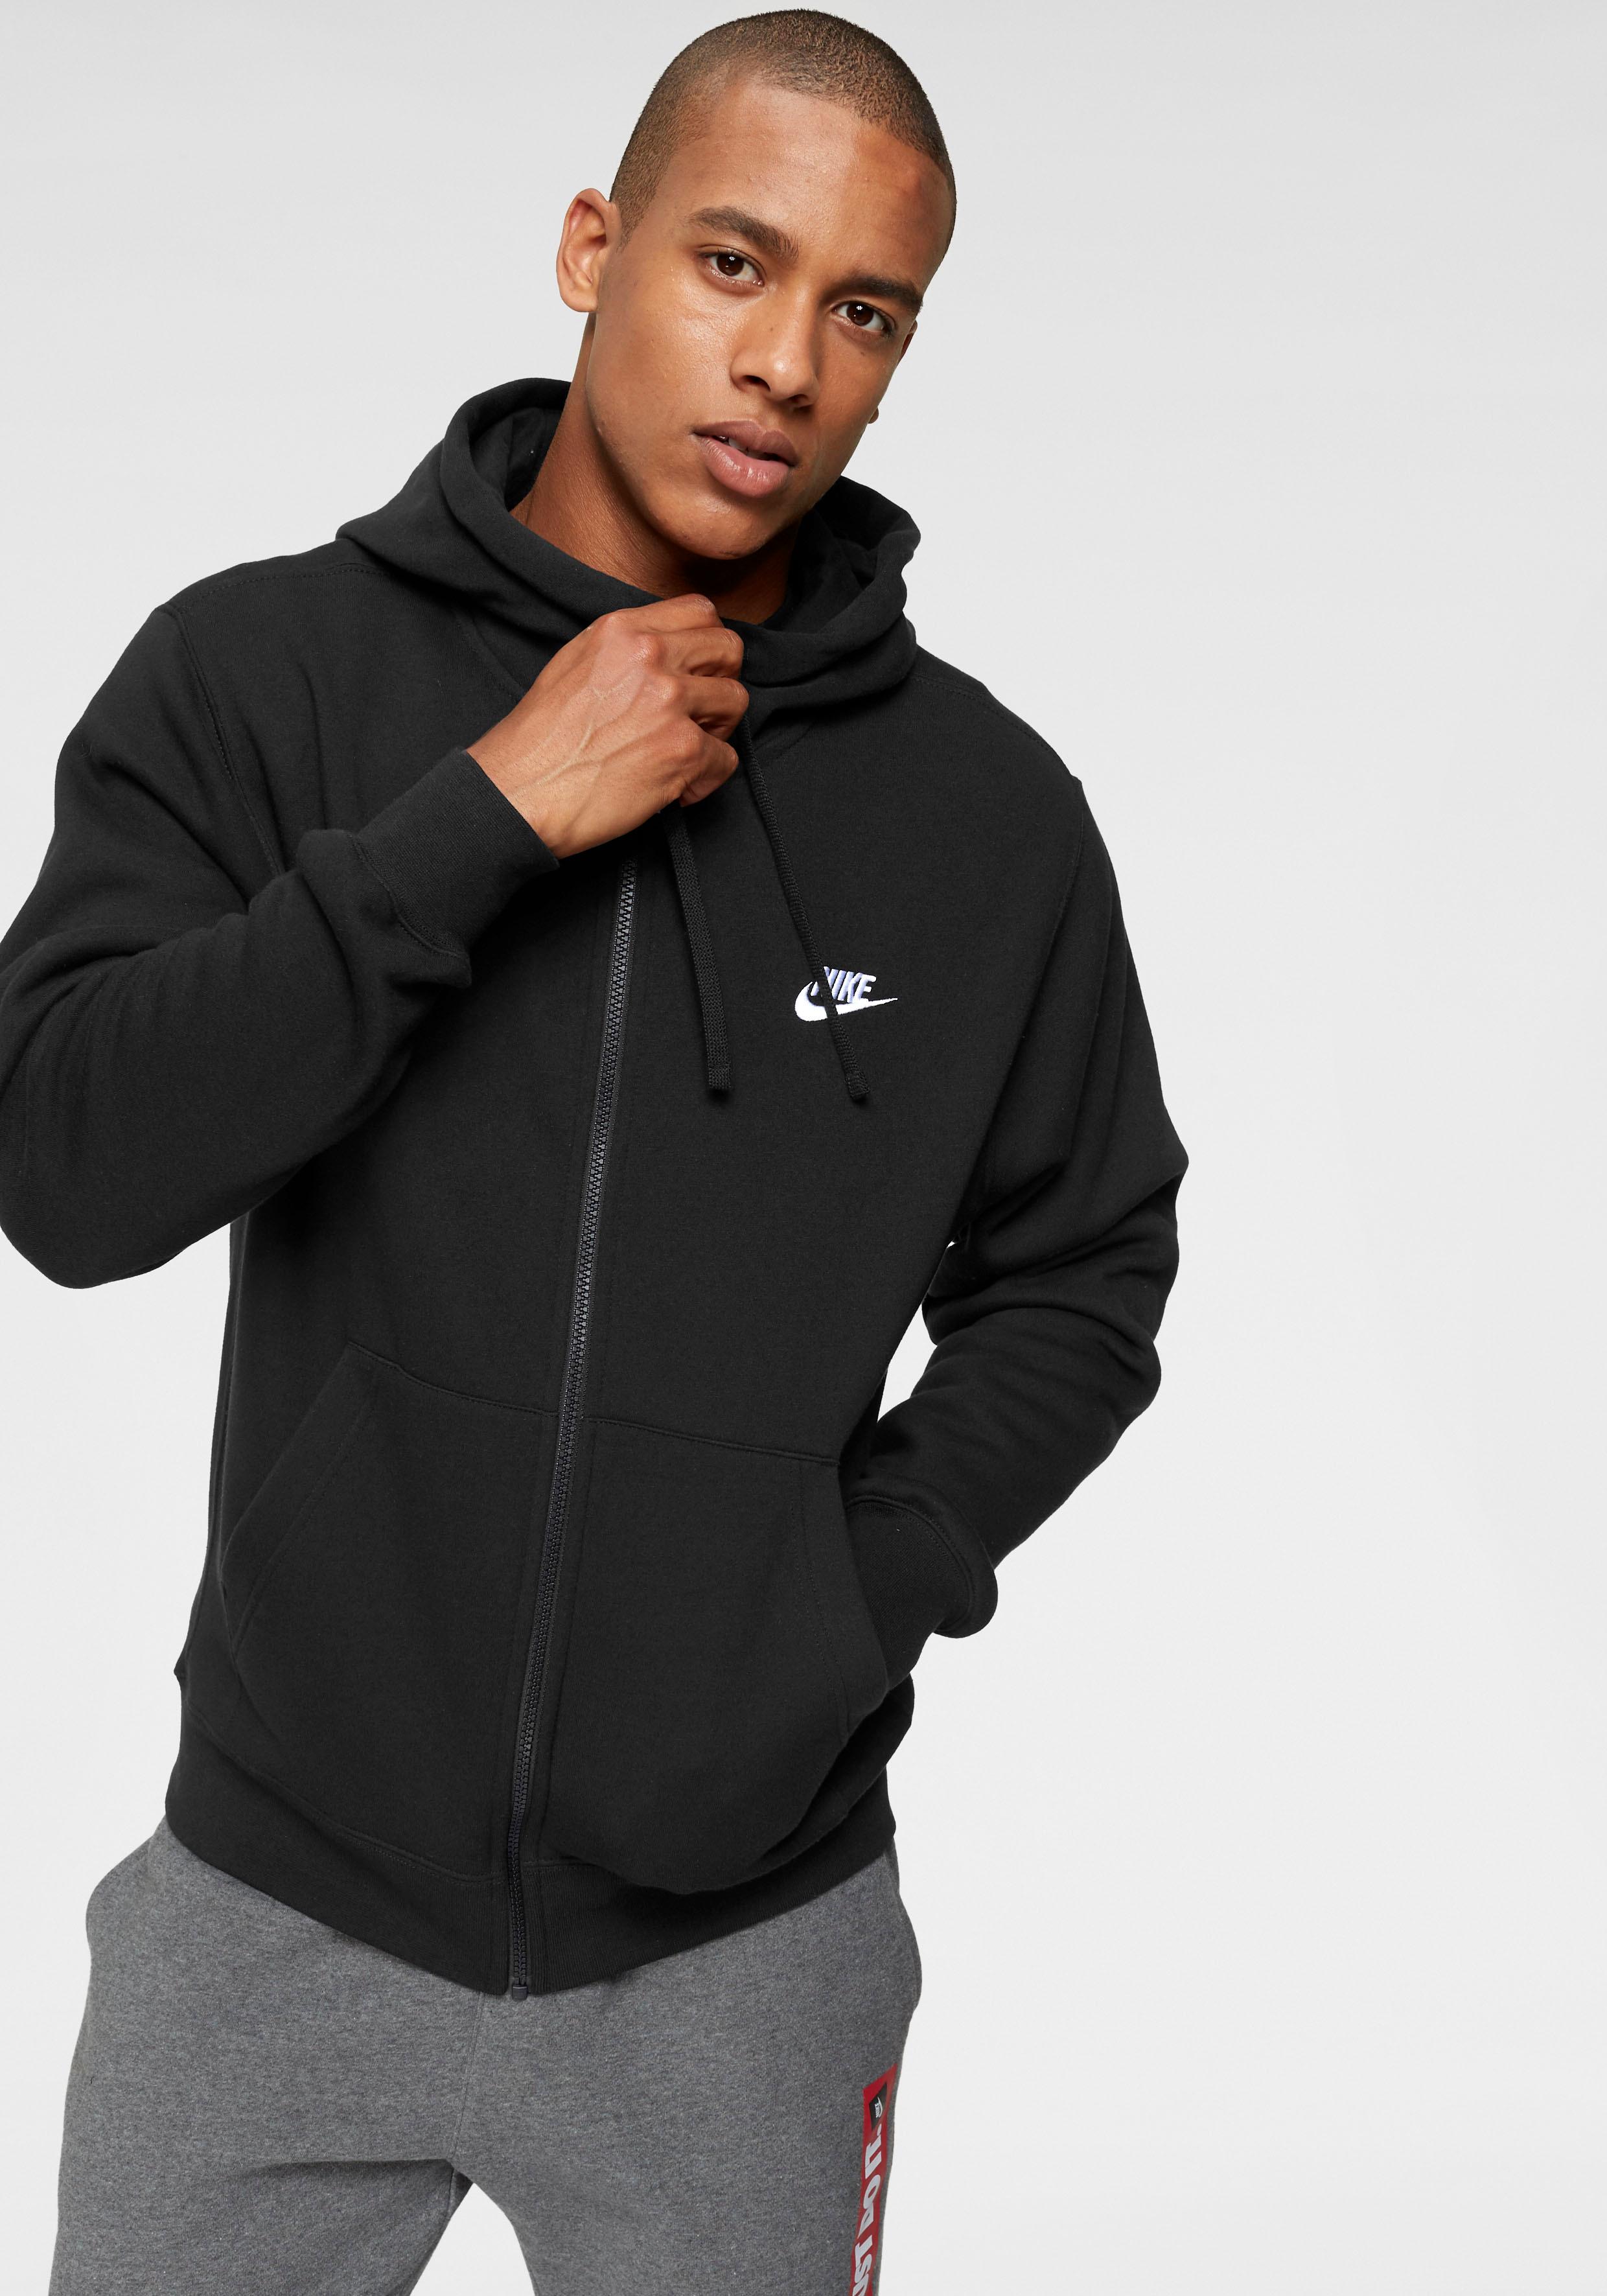 Pigment Rauw mengsel Nike Sweatshirts für Herren kaufen | Jelmoli-Versand